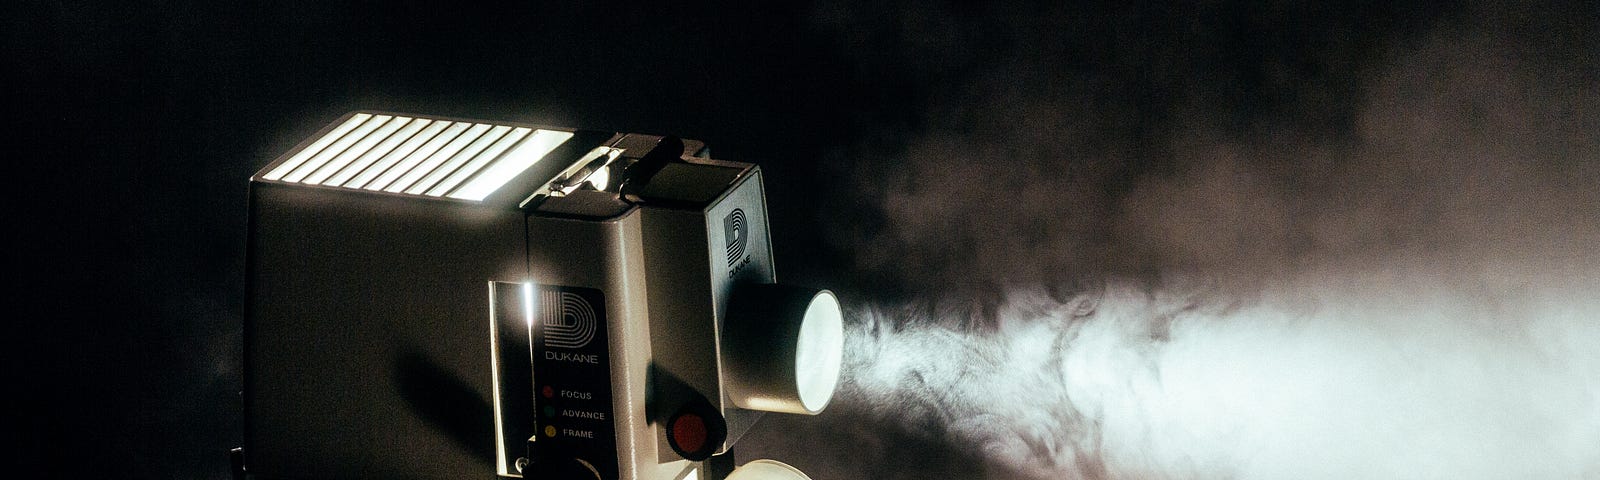 photo of vintage movie projector